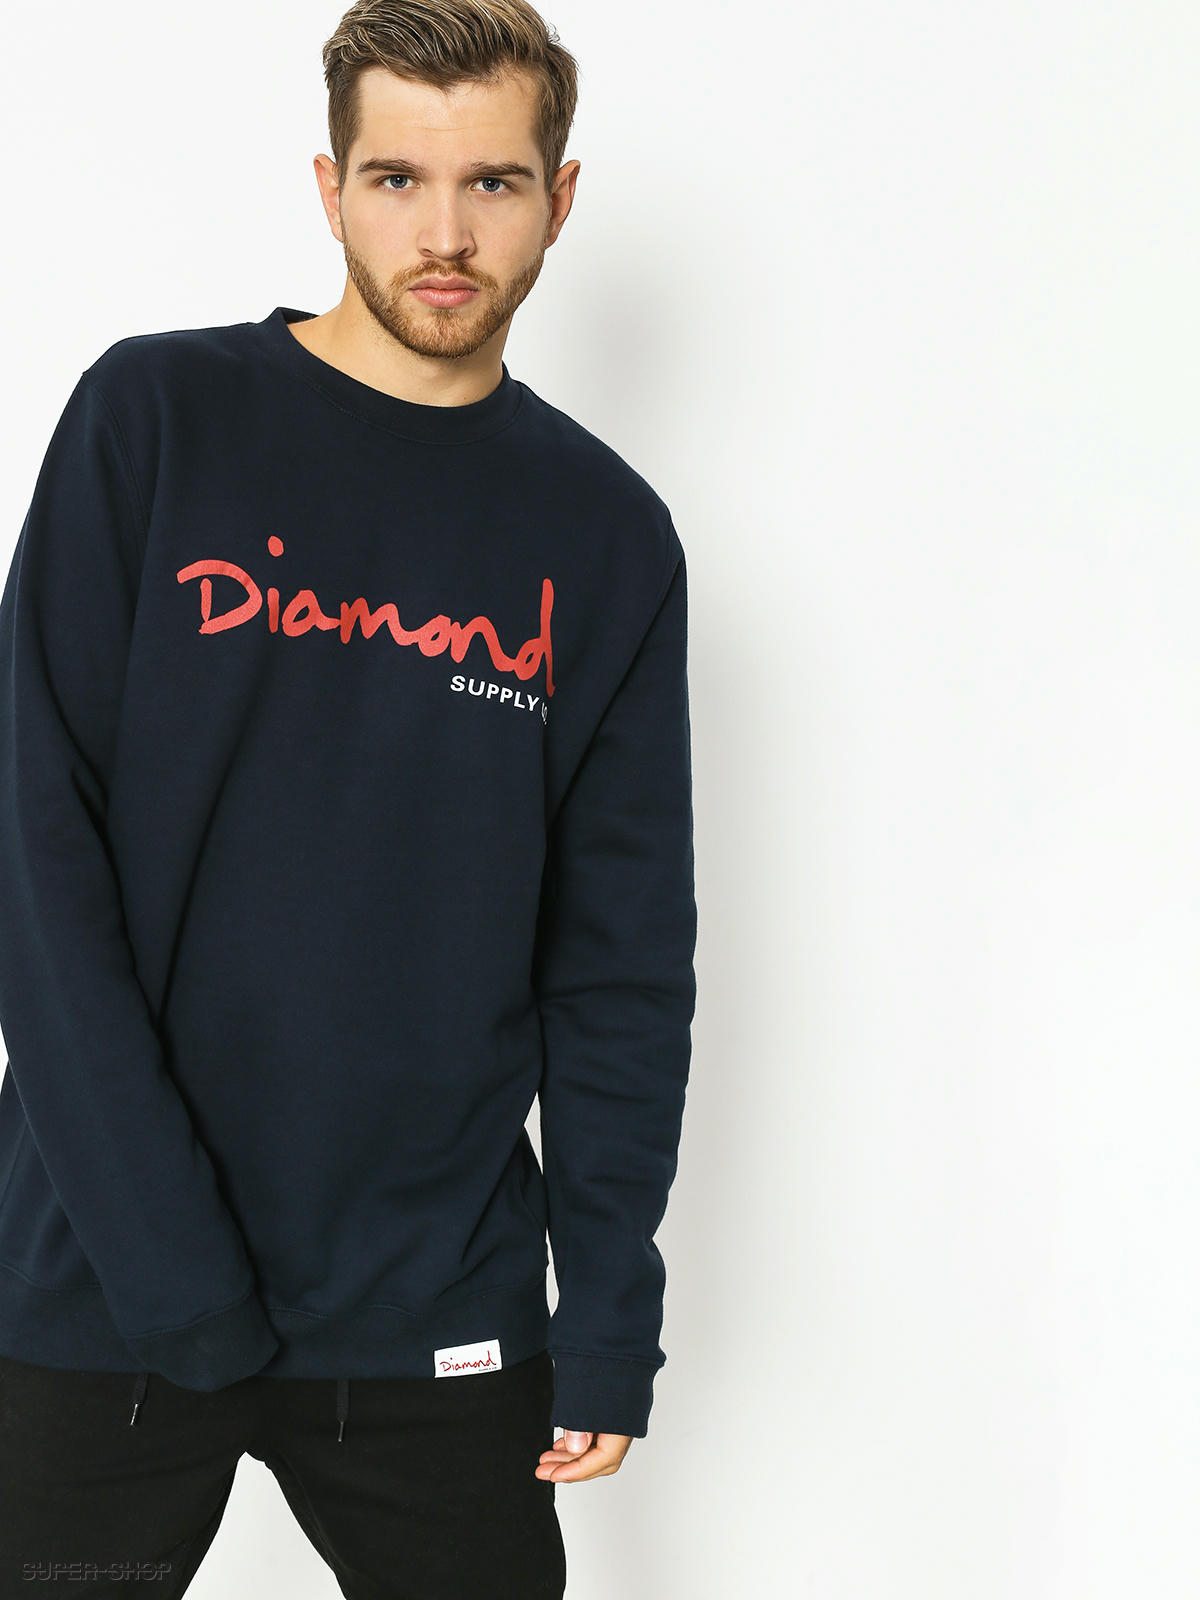 diamond supply sweatshirt